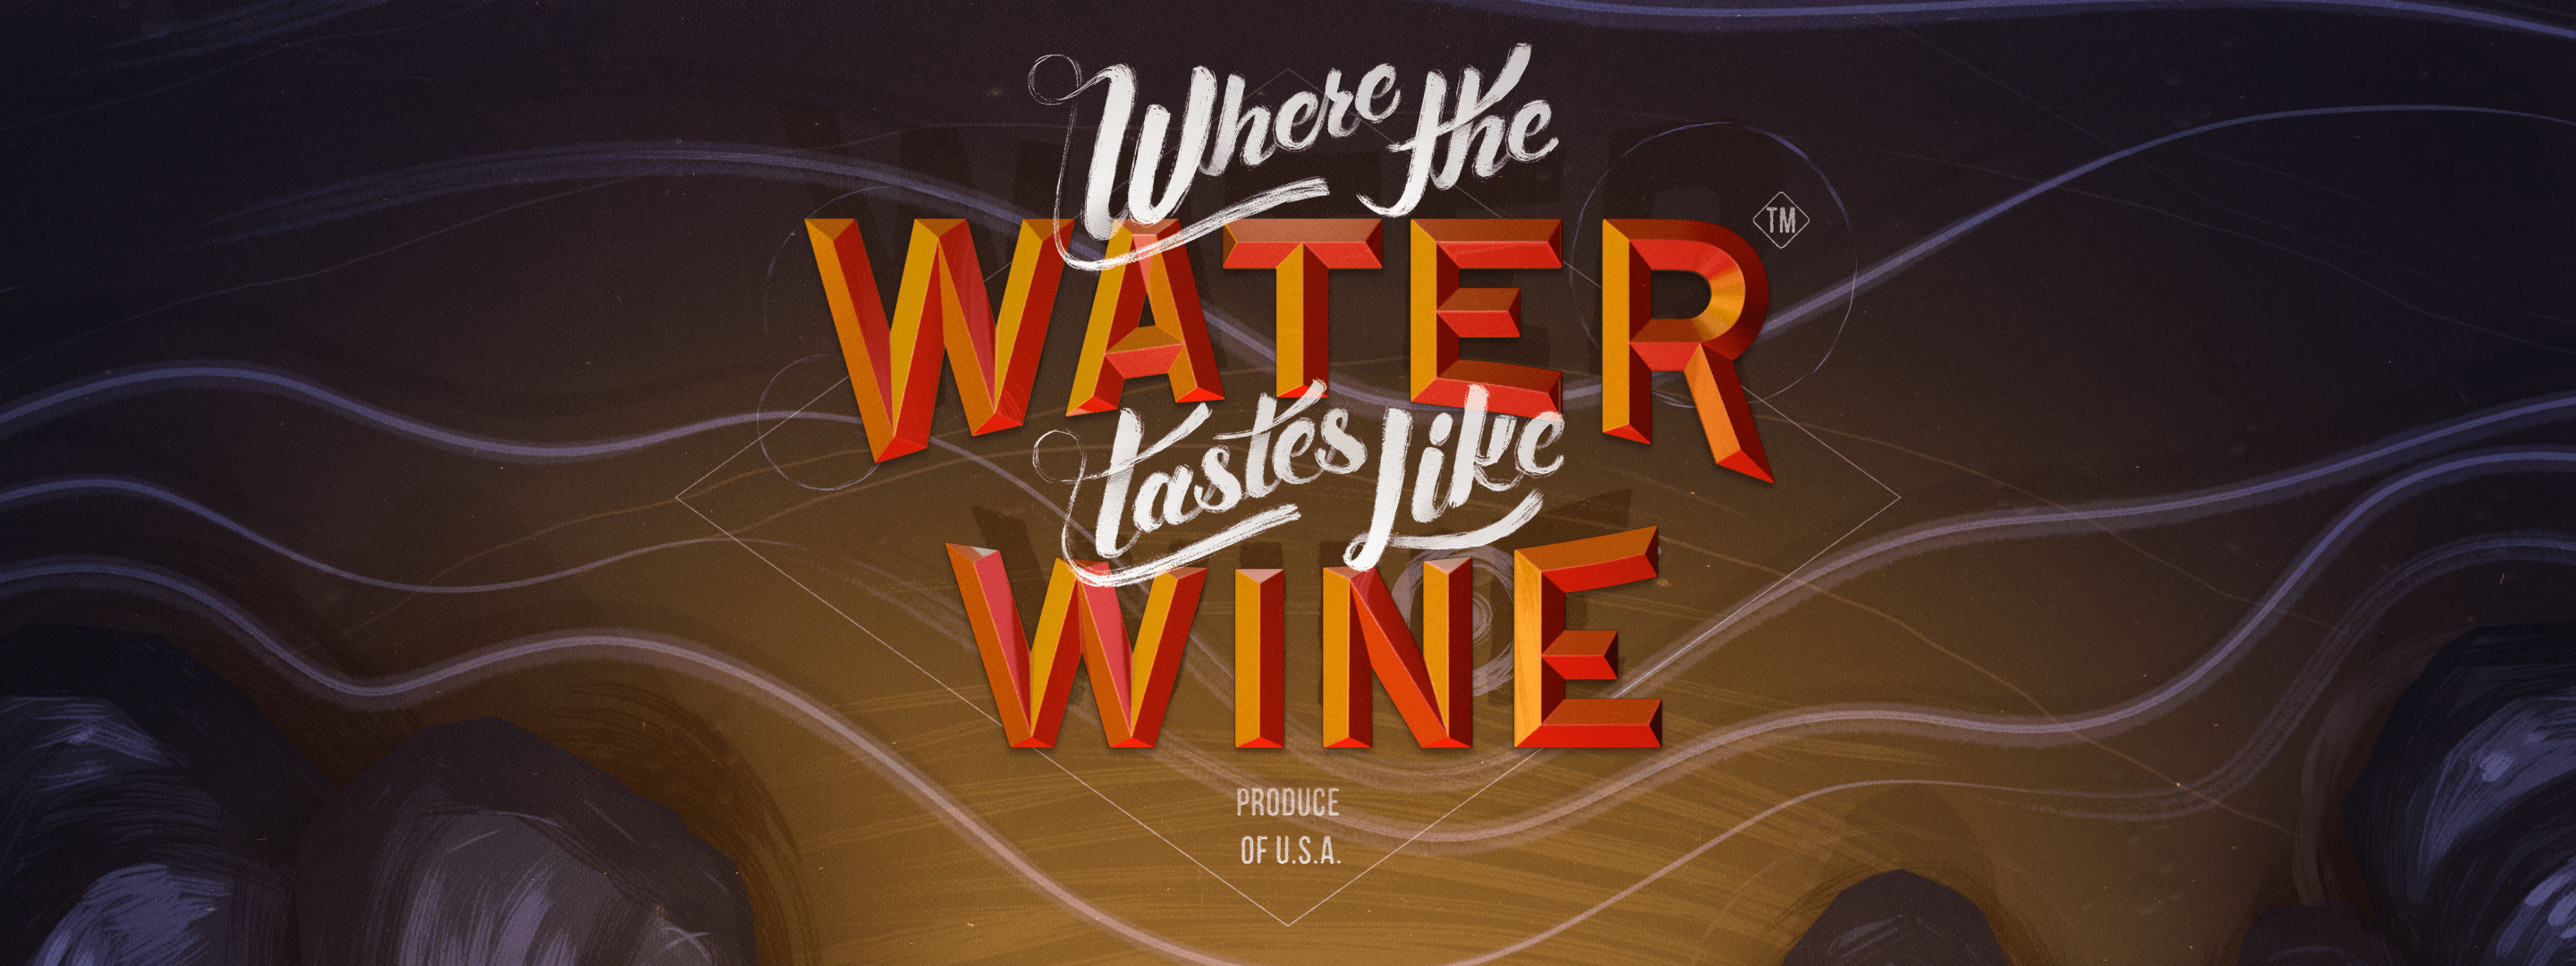 Taste like water. Where the Water tastes. Where the Water tastes like Wine. Where the Water tastes игра. Where the Water tastes like Wine истории читать.